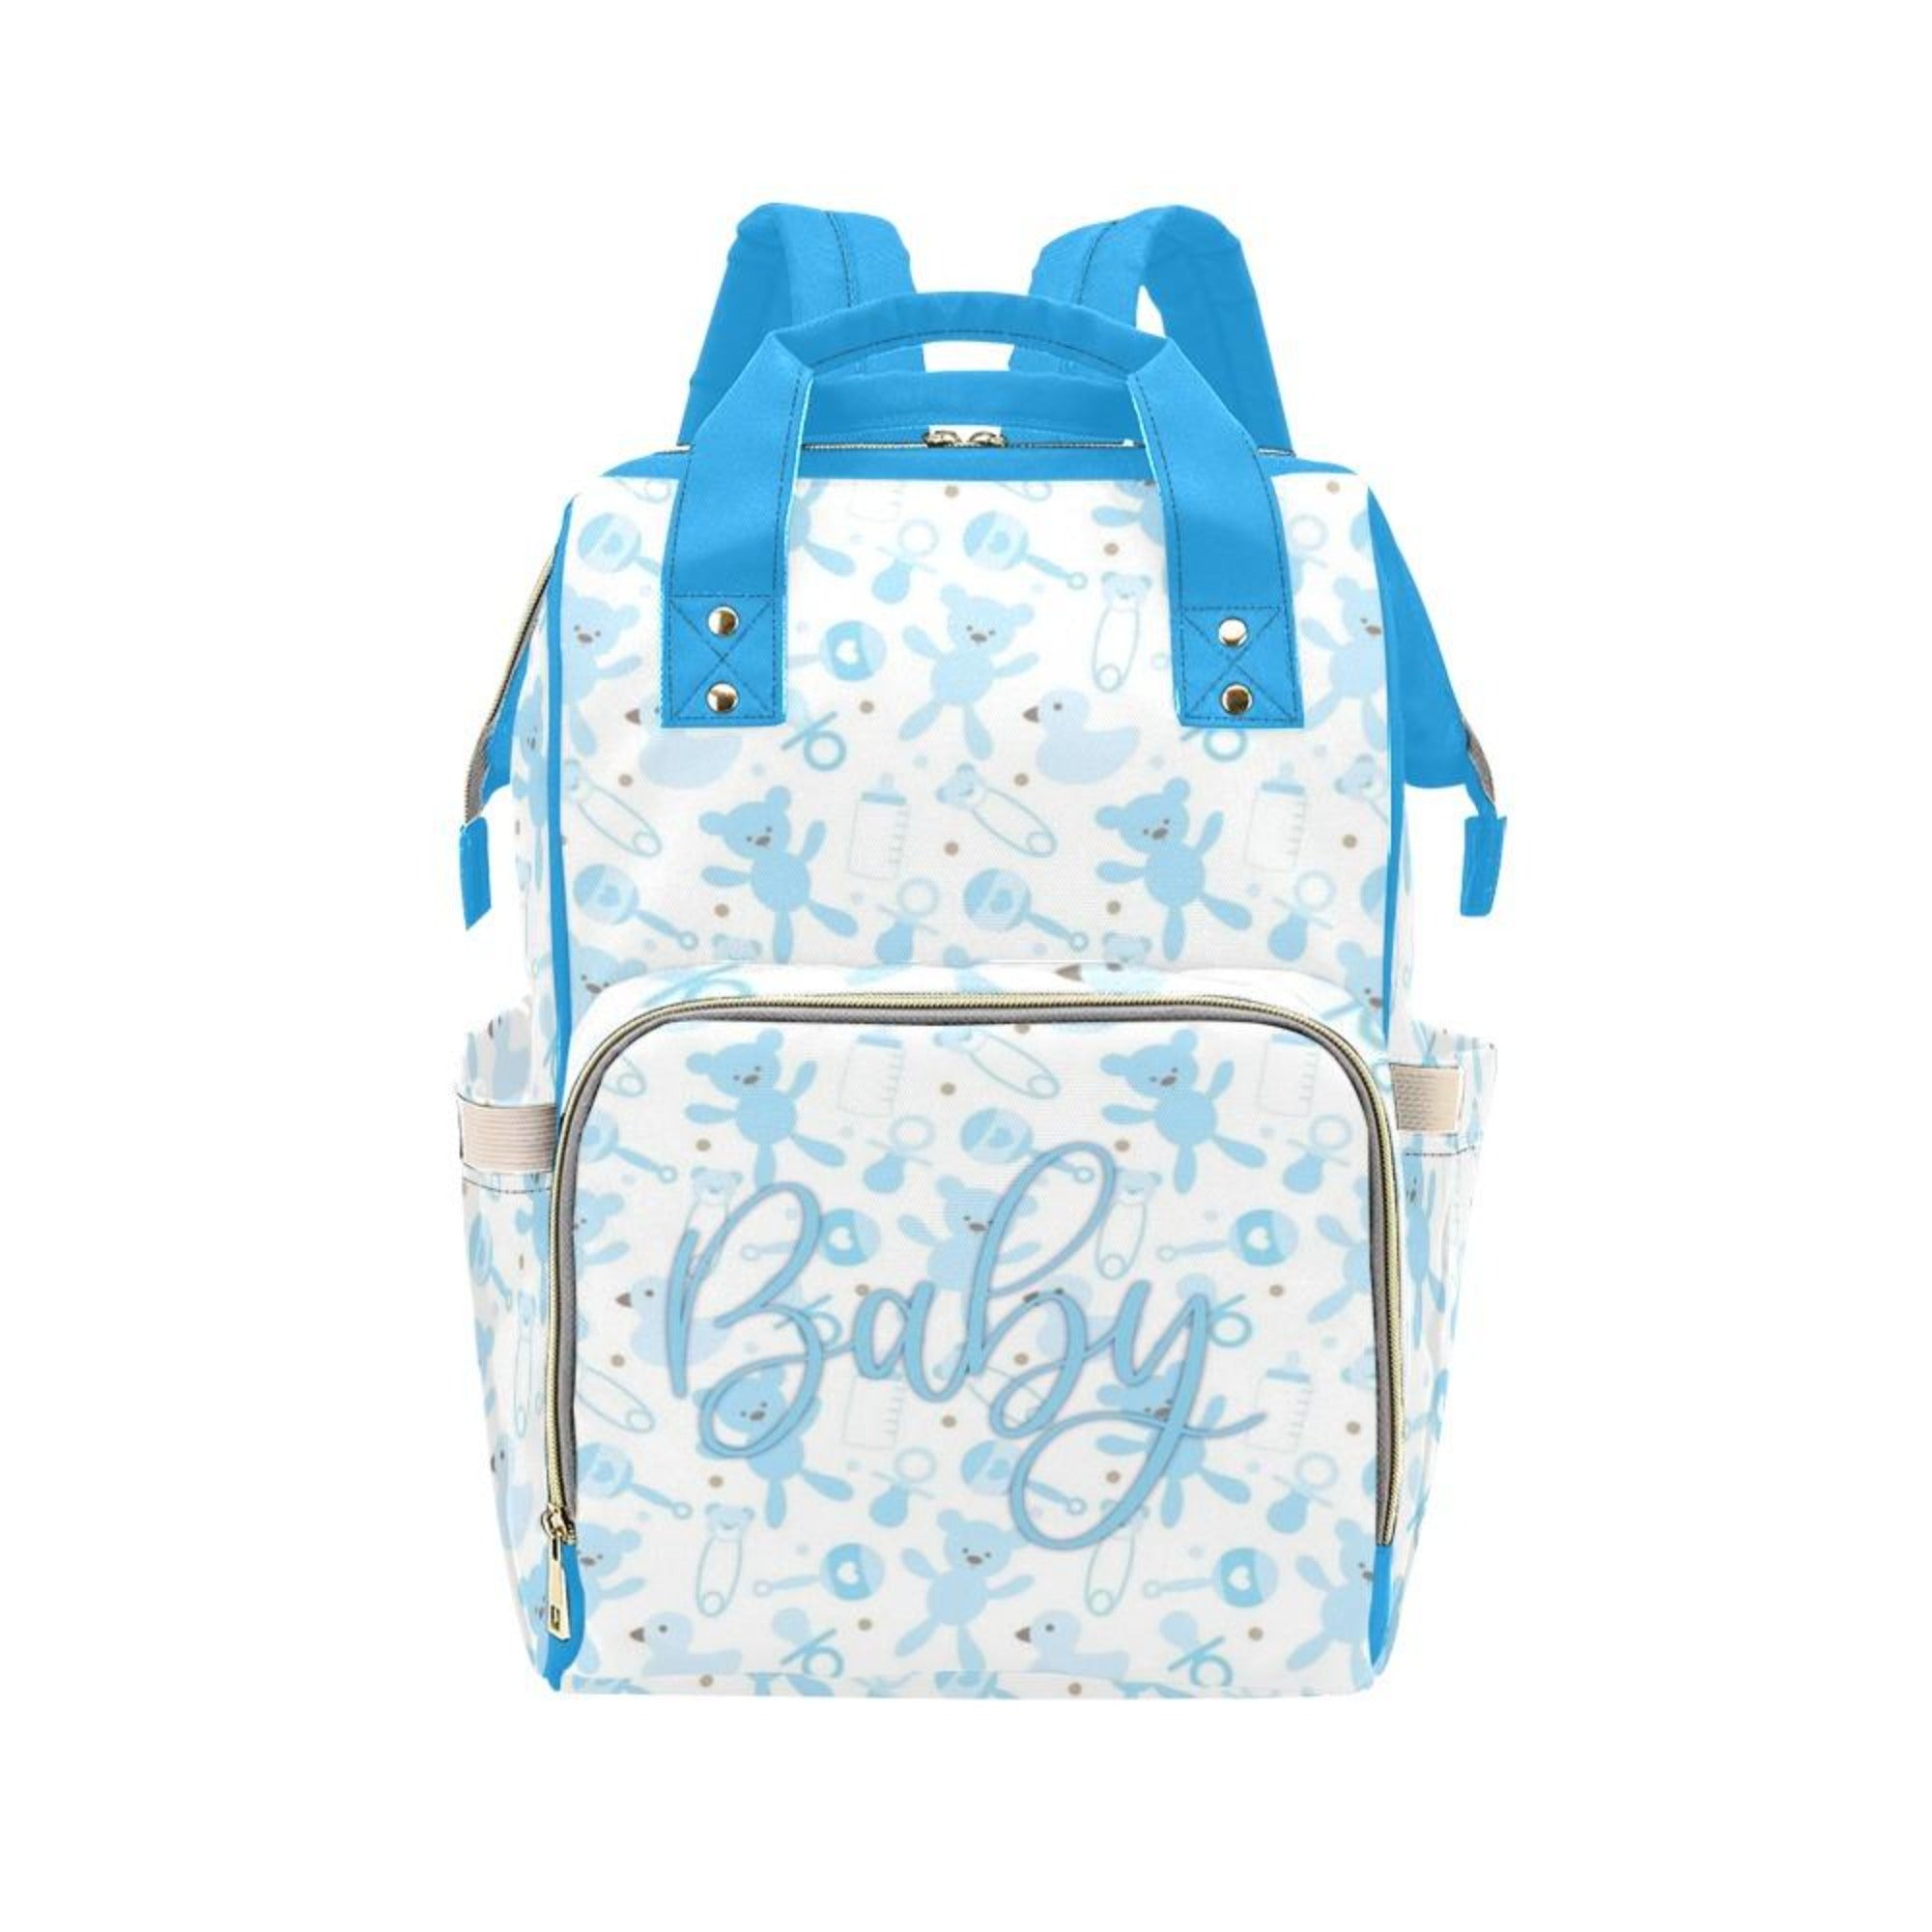 Designer Diaper Bags - Backpack Baby Bag Baby Blue For Boys - Multi-Function Backpack